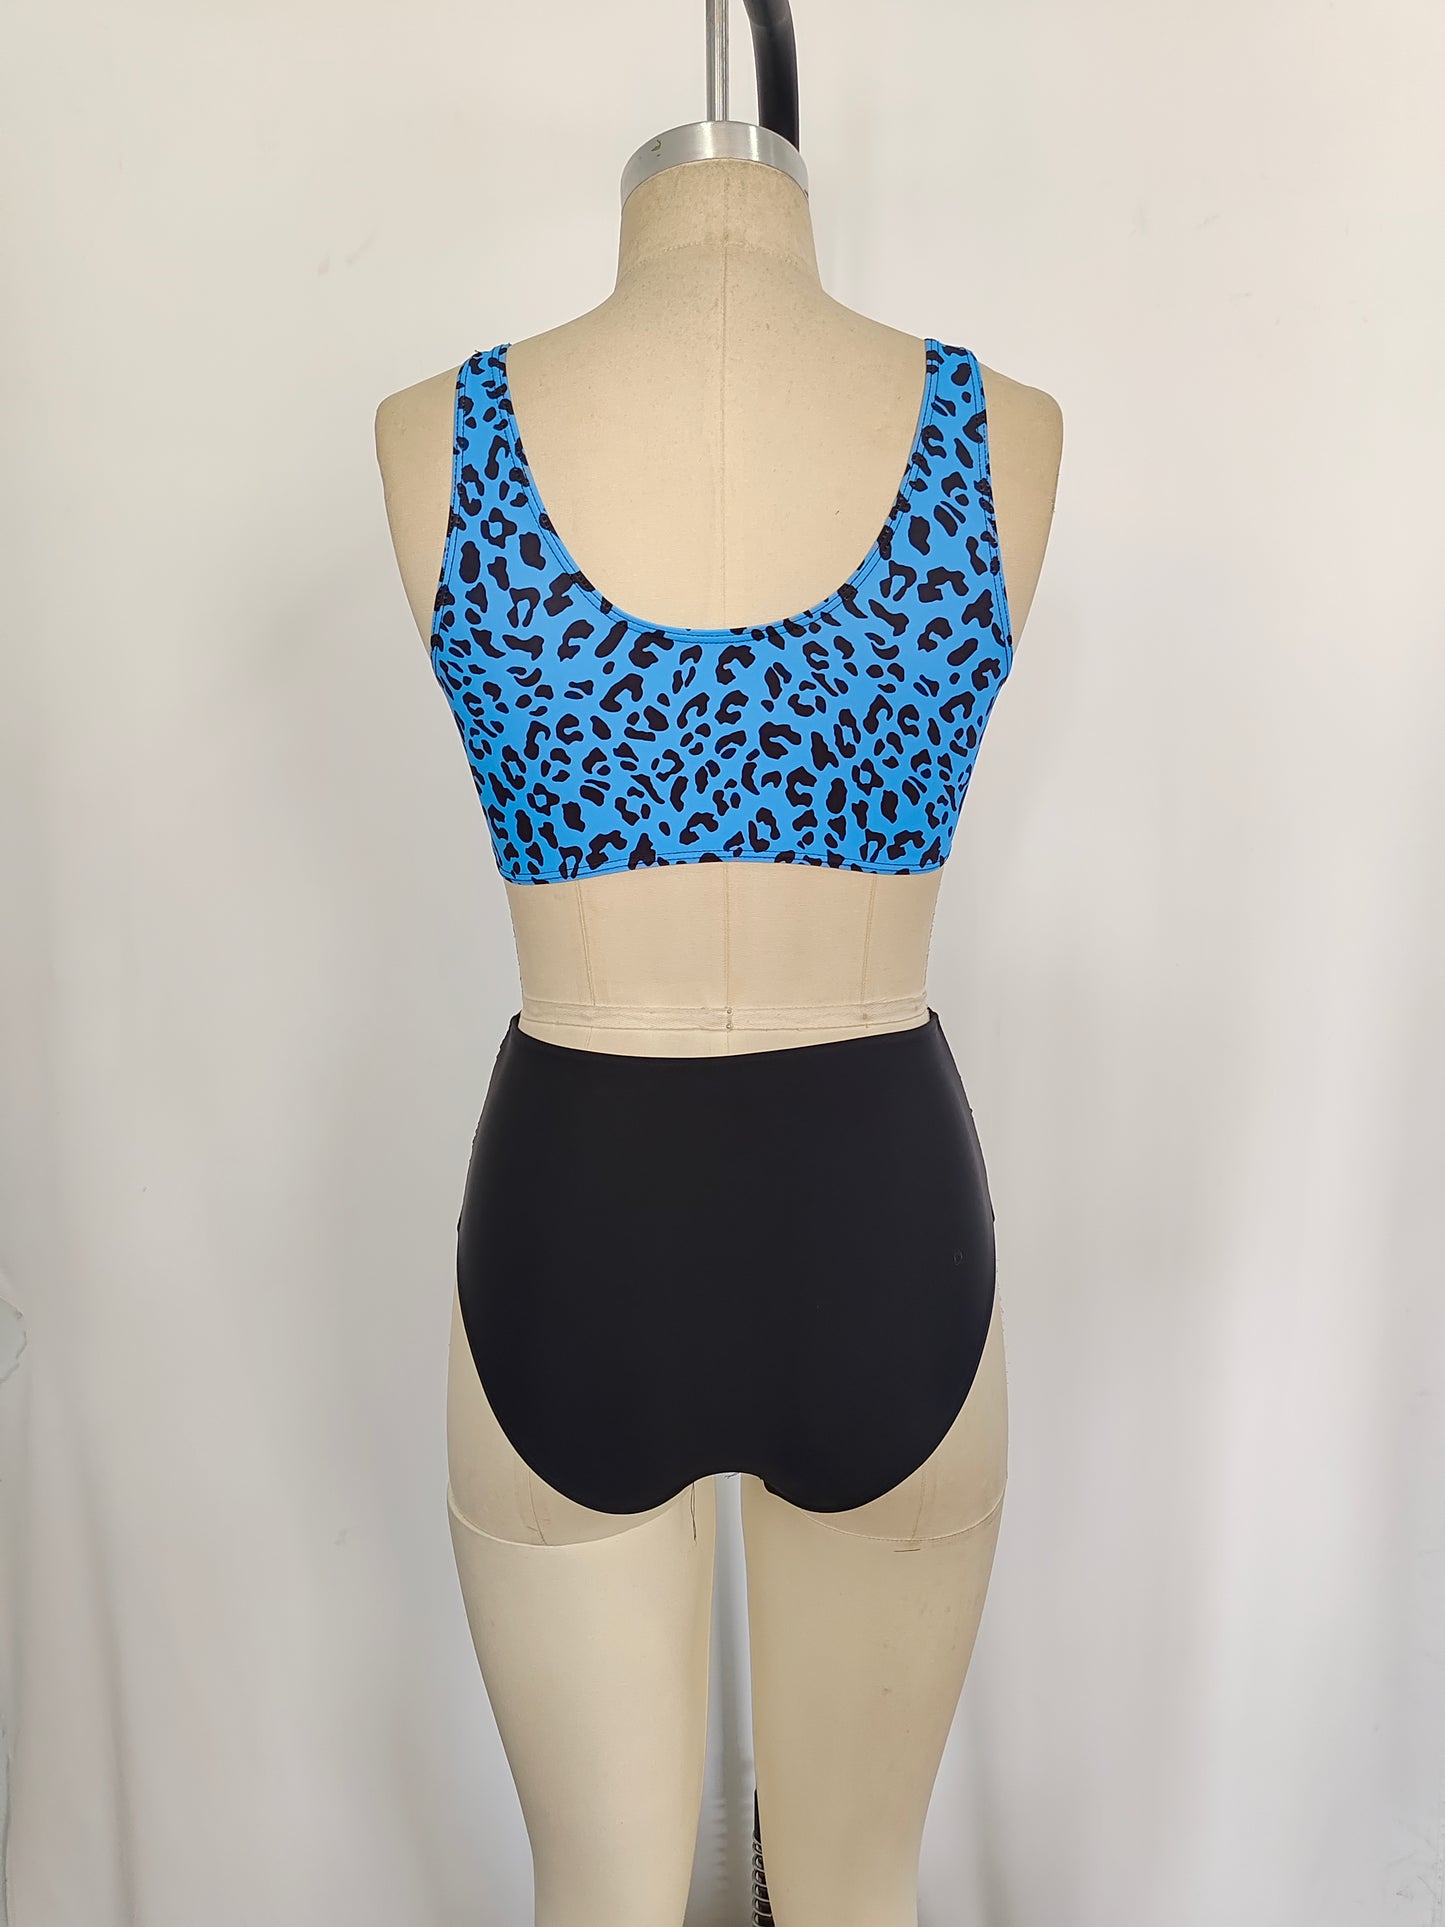 S0290 Adult Blue Leopard Top Black Trunks Woman 2 Pieces Swimsuits